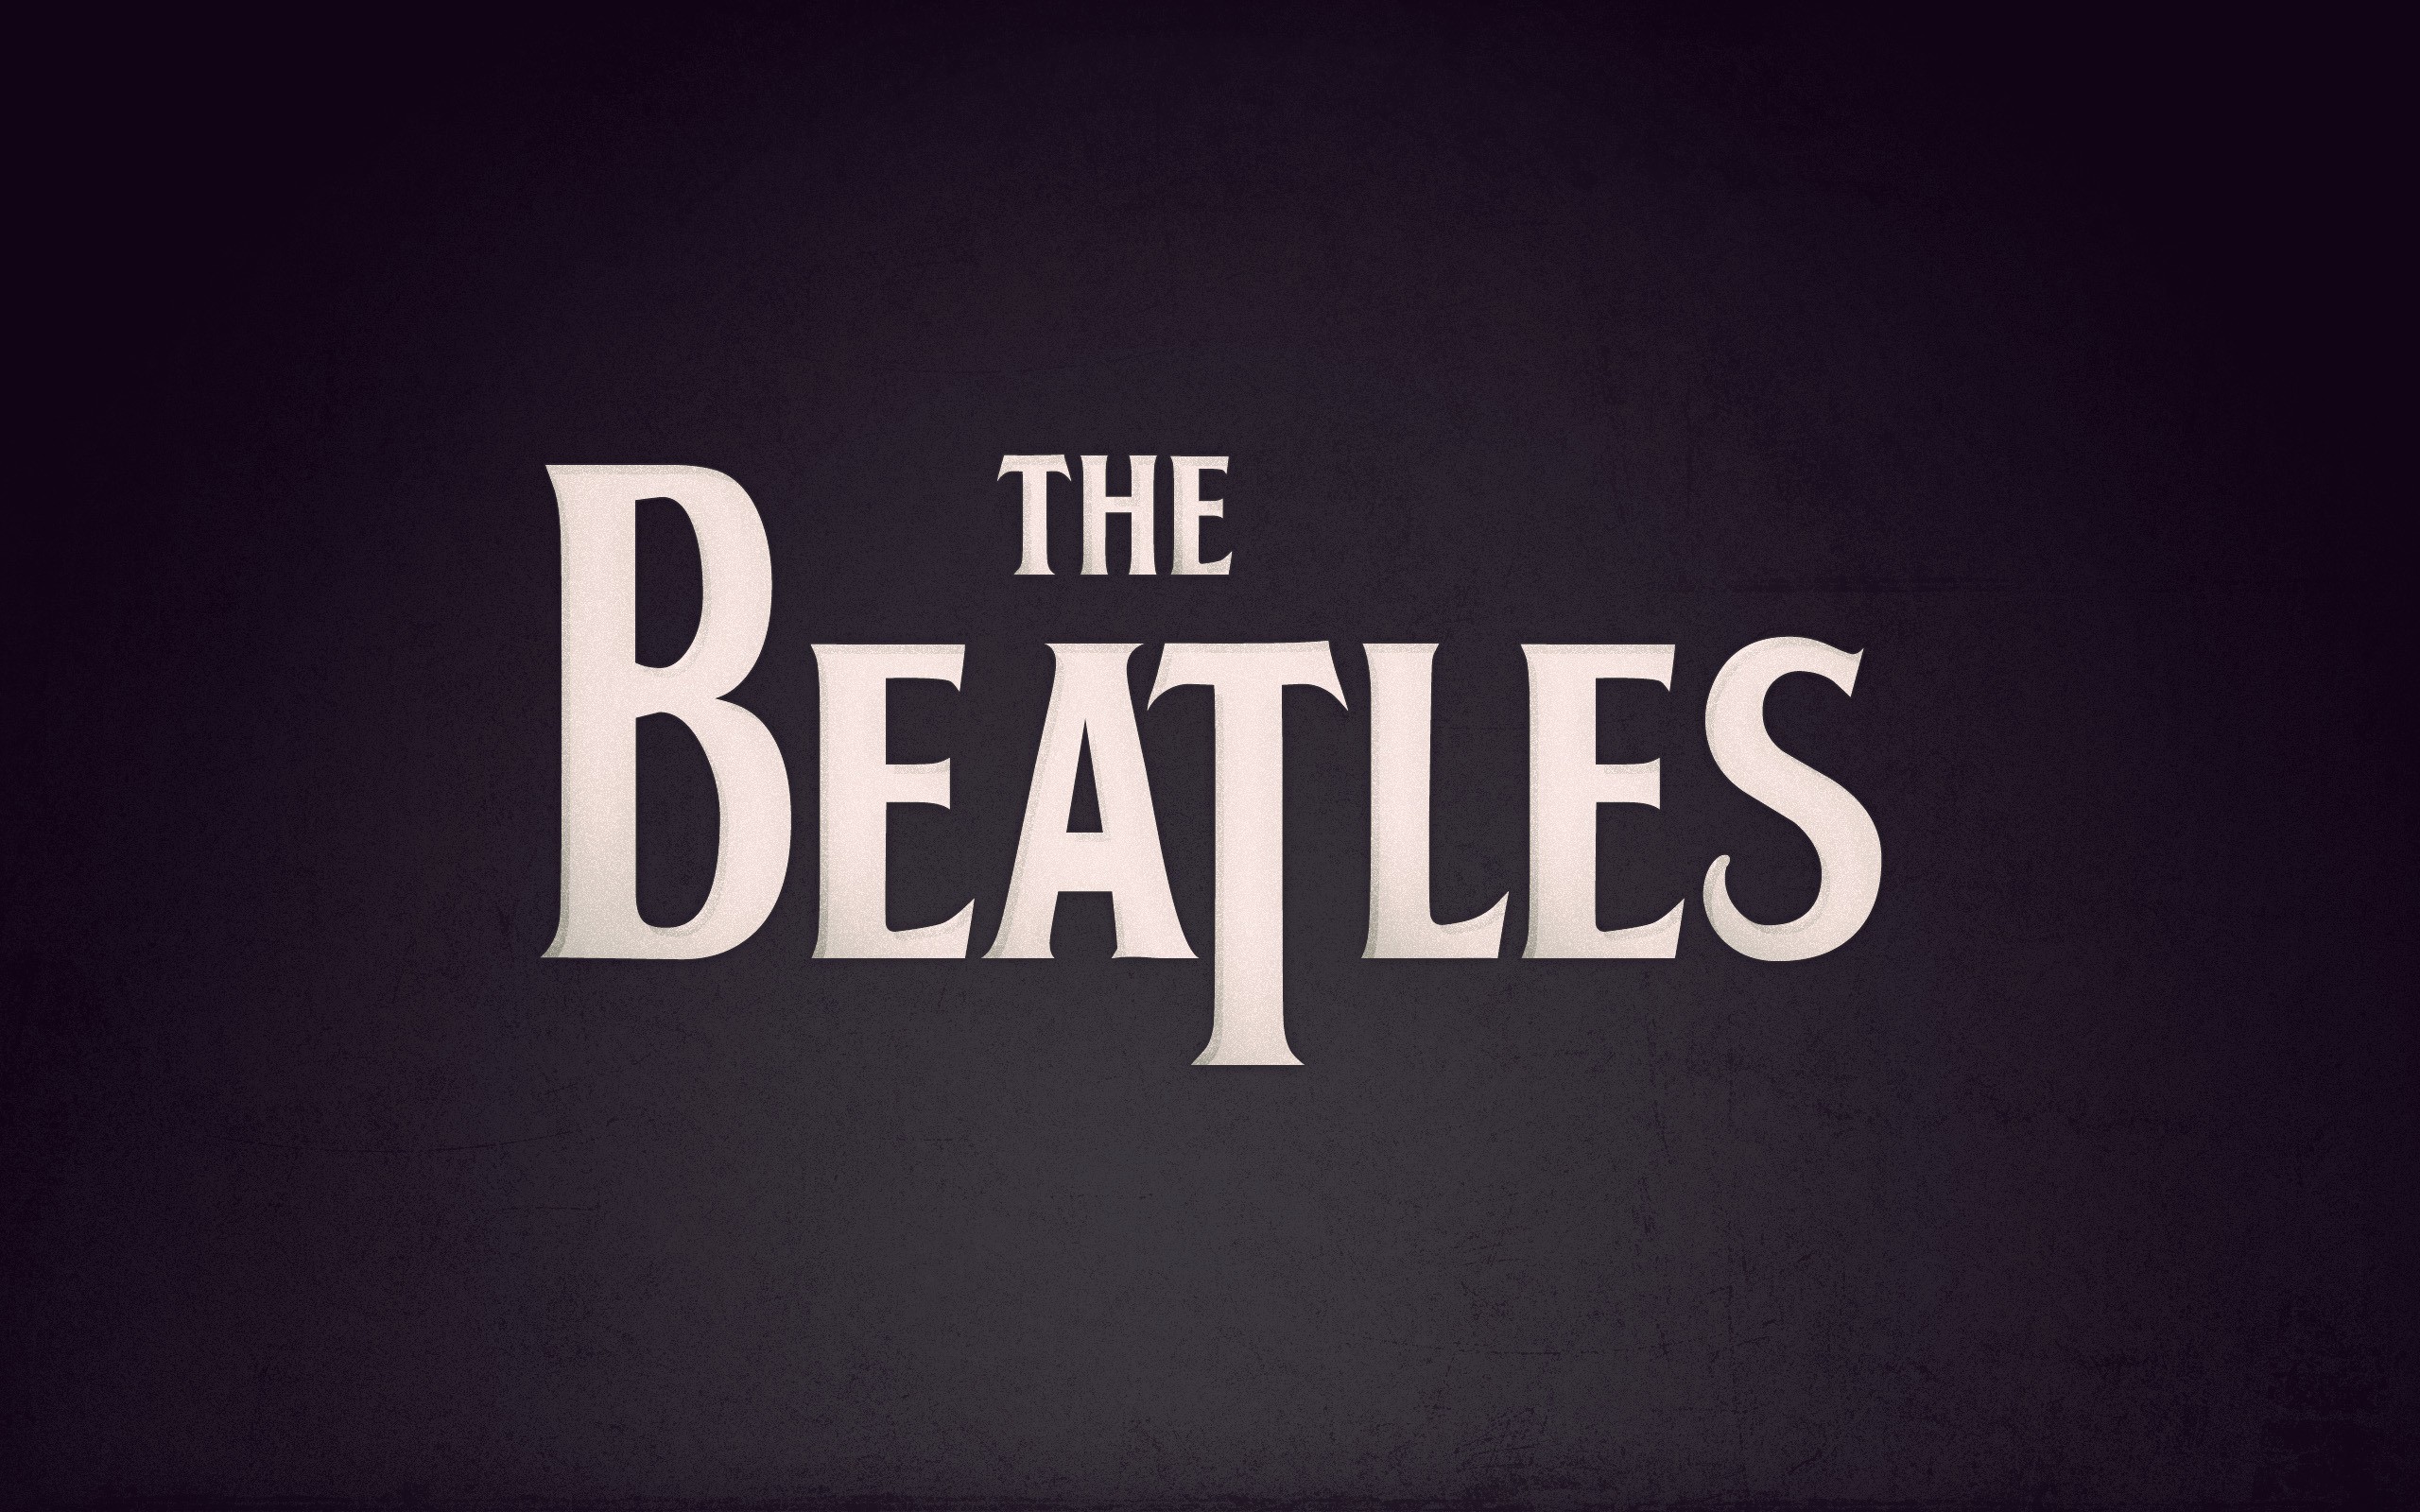 The Beatles wallpaper. The Beatles